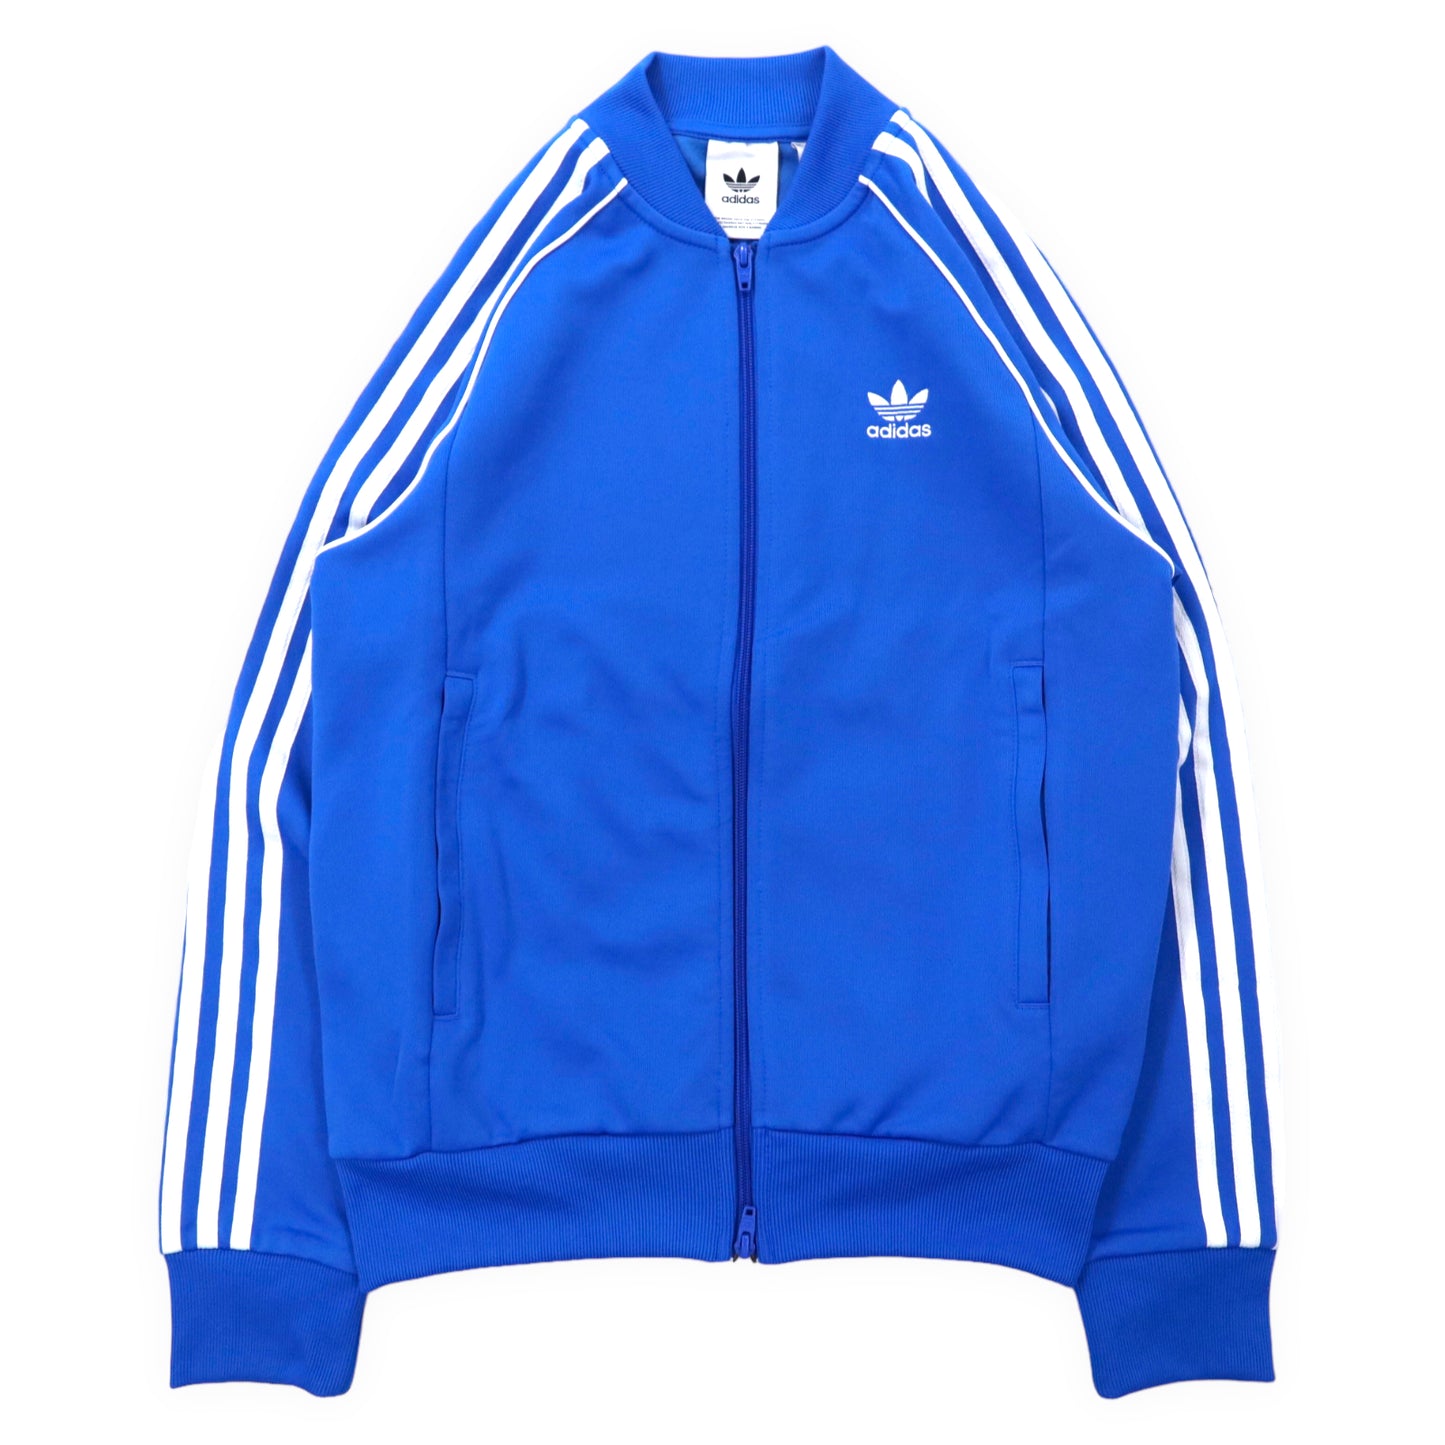 Adidas Originals ATP type track jacket jersey S Blue Polyester ...